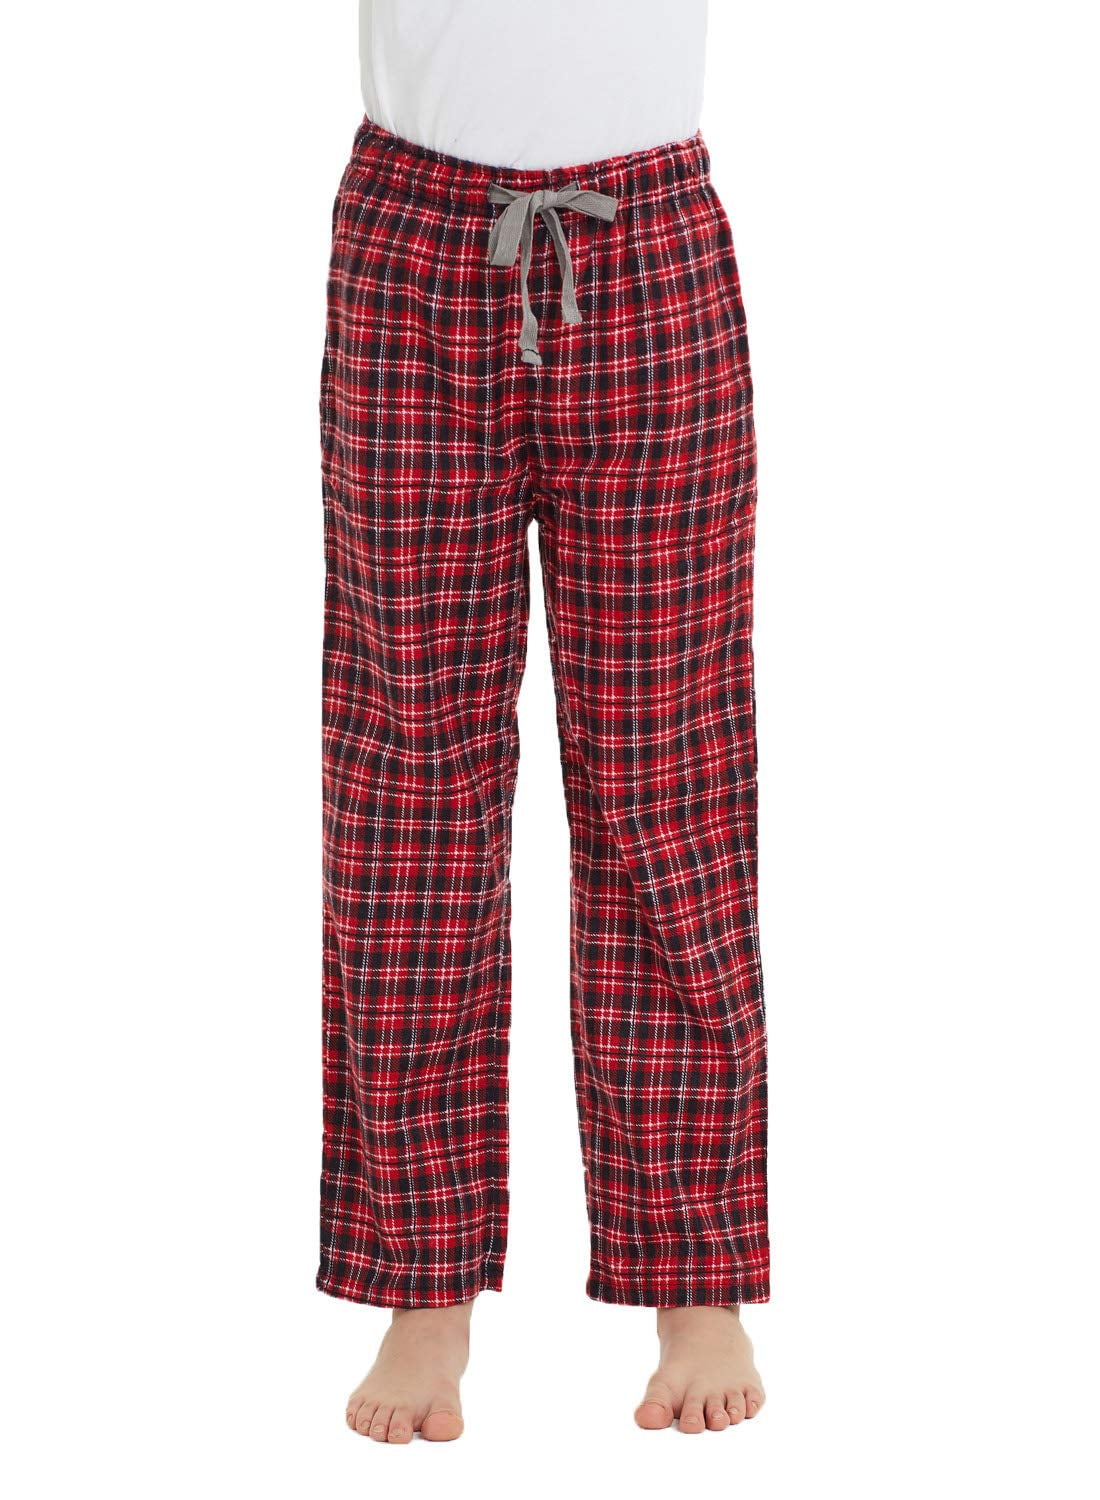 HiddenValor Big Boys Cotton Pajama Lounge Pants - Red/Black, Medium ...